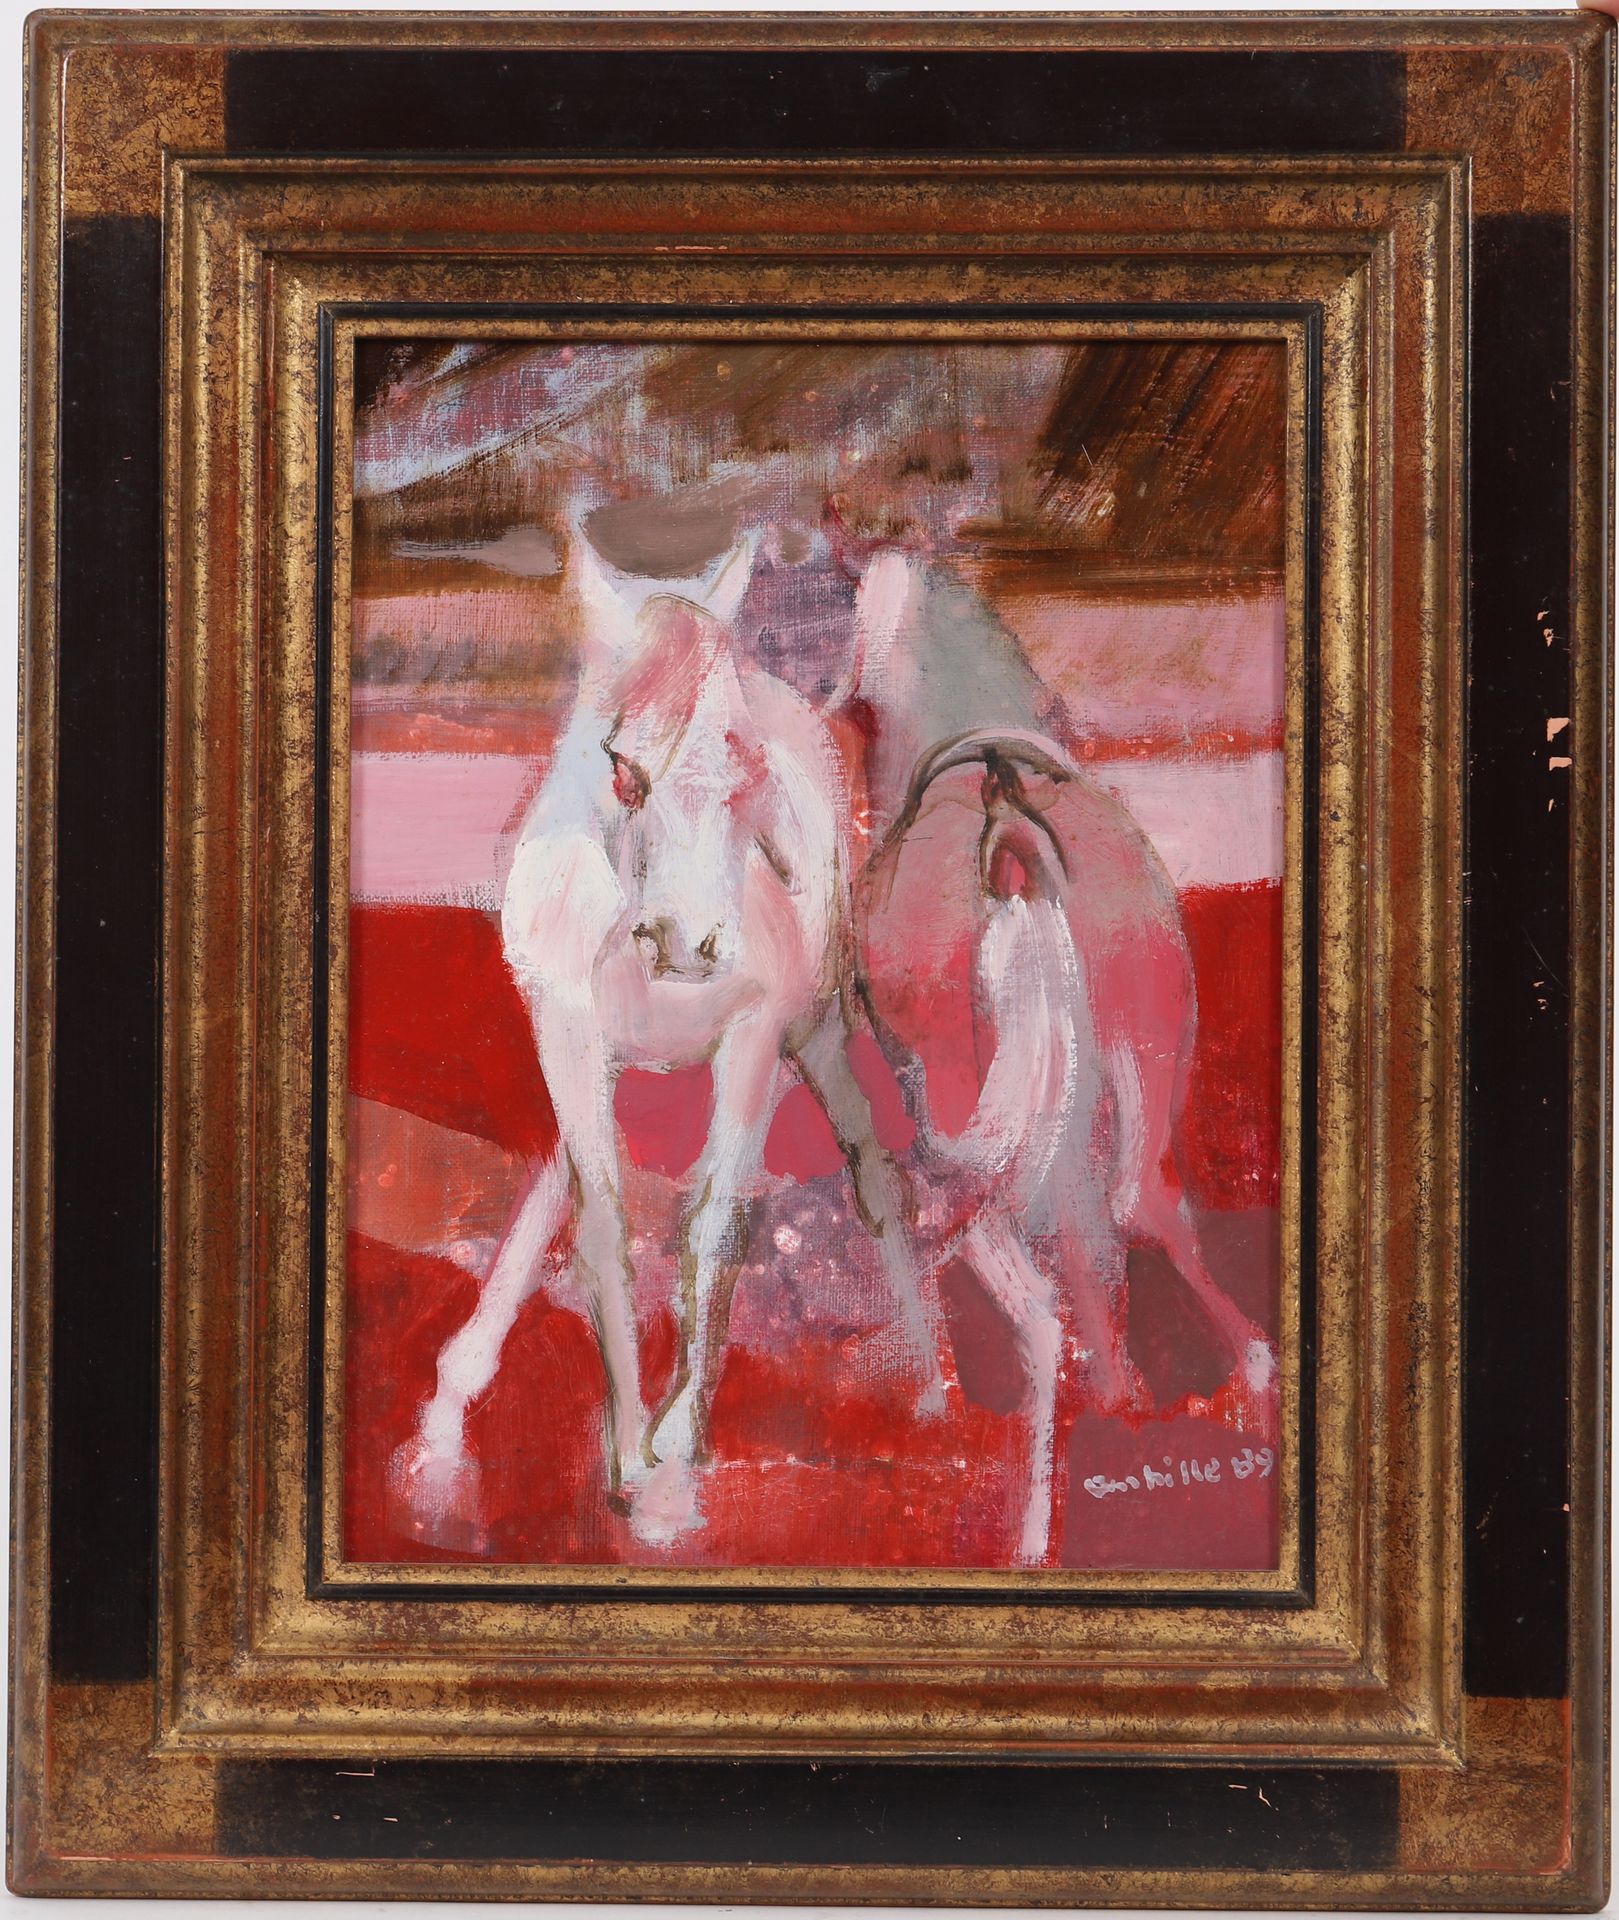 Null 保罗-安比尔(1930-2010) 
"马戏团里的马"。 
布面油画，右下方有签名和日期89 
目测尺寸：高：34；宽：25.5厘米